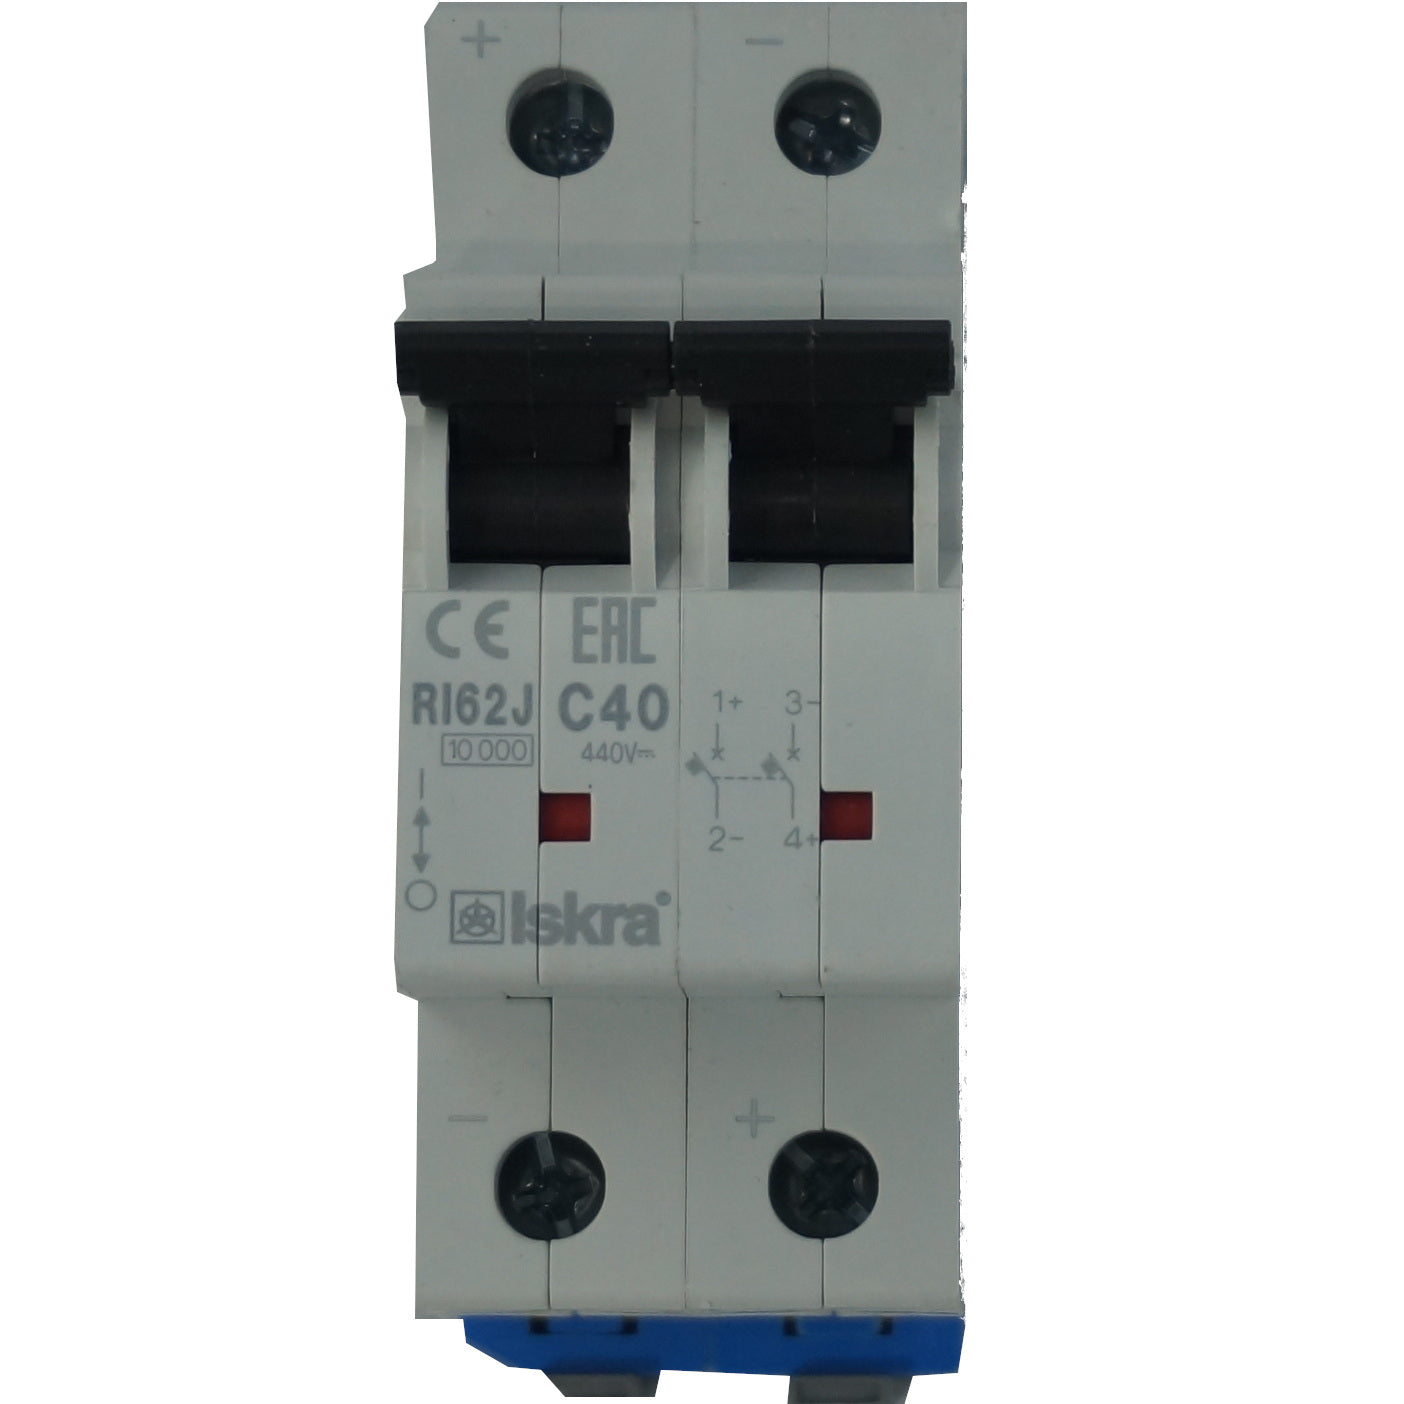 RI62J C 20-10kA, 2 Pole DC Miniature Circuit Breaker Disconnect Switch C Curve 20 Amp, 440VDC, 10kA